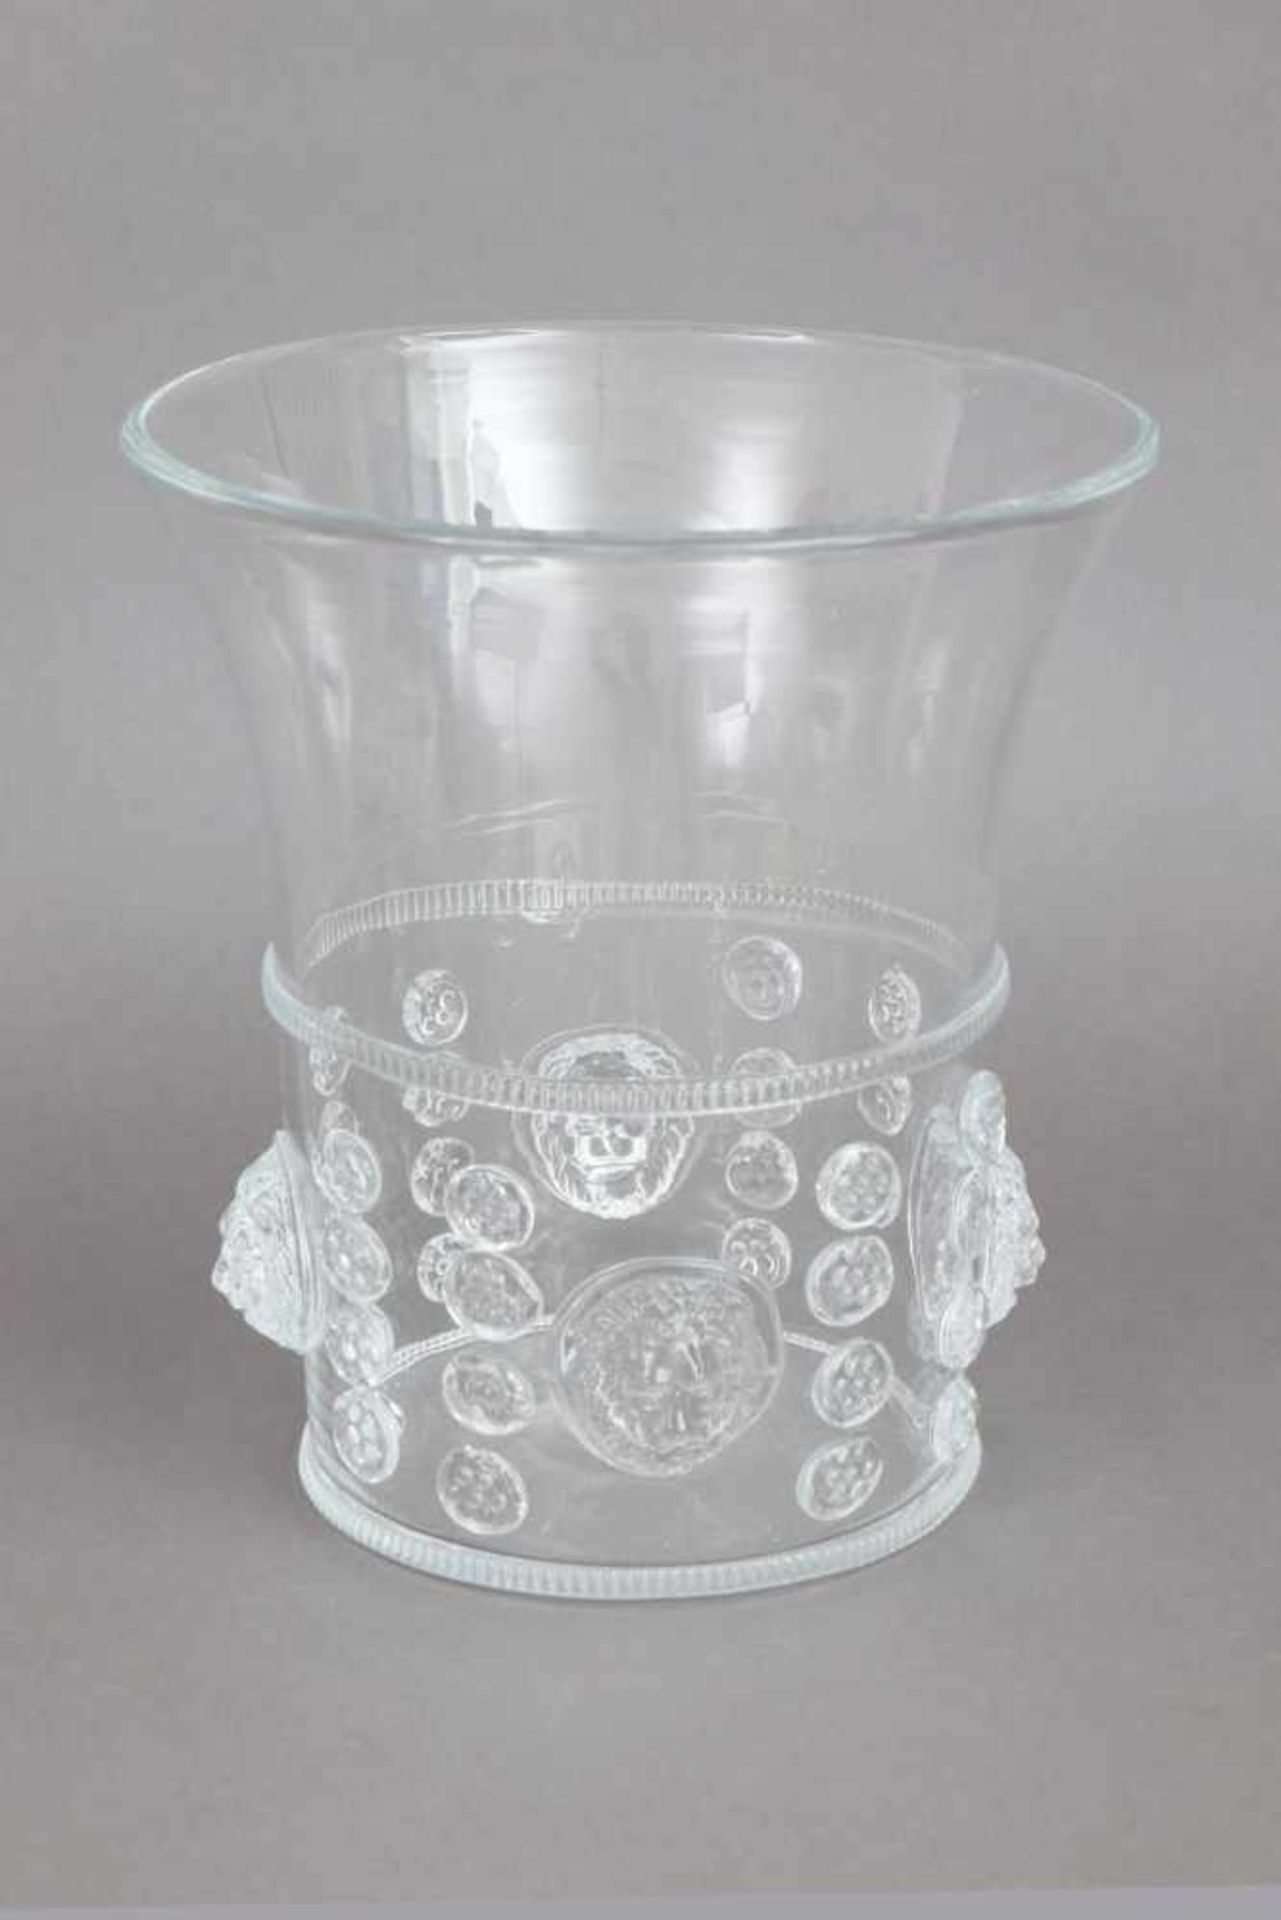 Vasengefäß Glas, wohl GUNTER LAMBERT, zylindrischer Korpus, Wandung mit Noppen, Rosetten-, Perl-